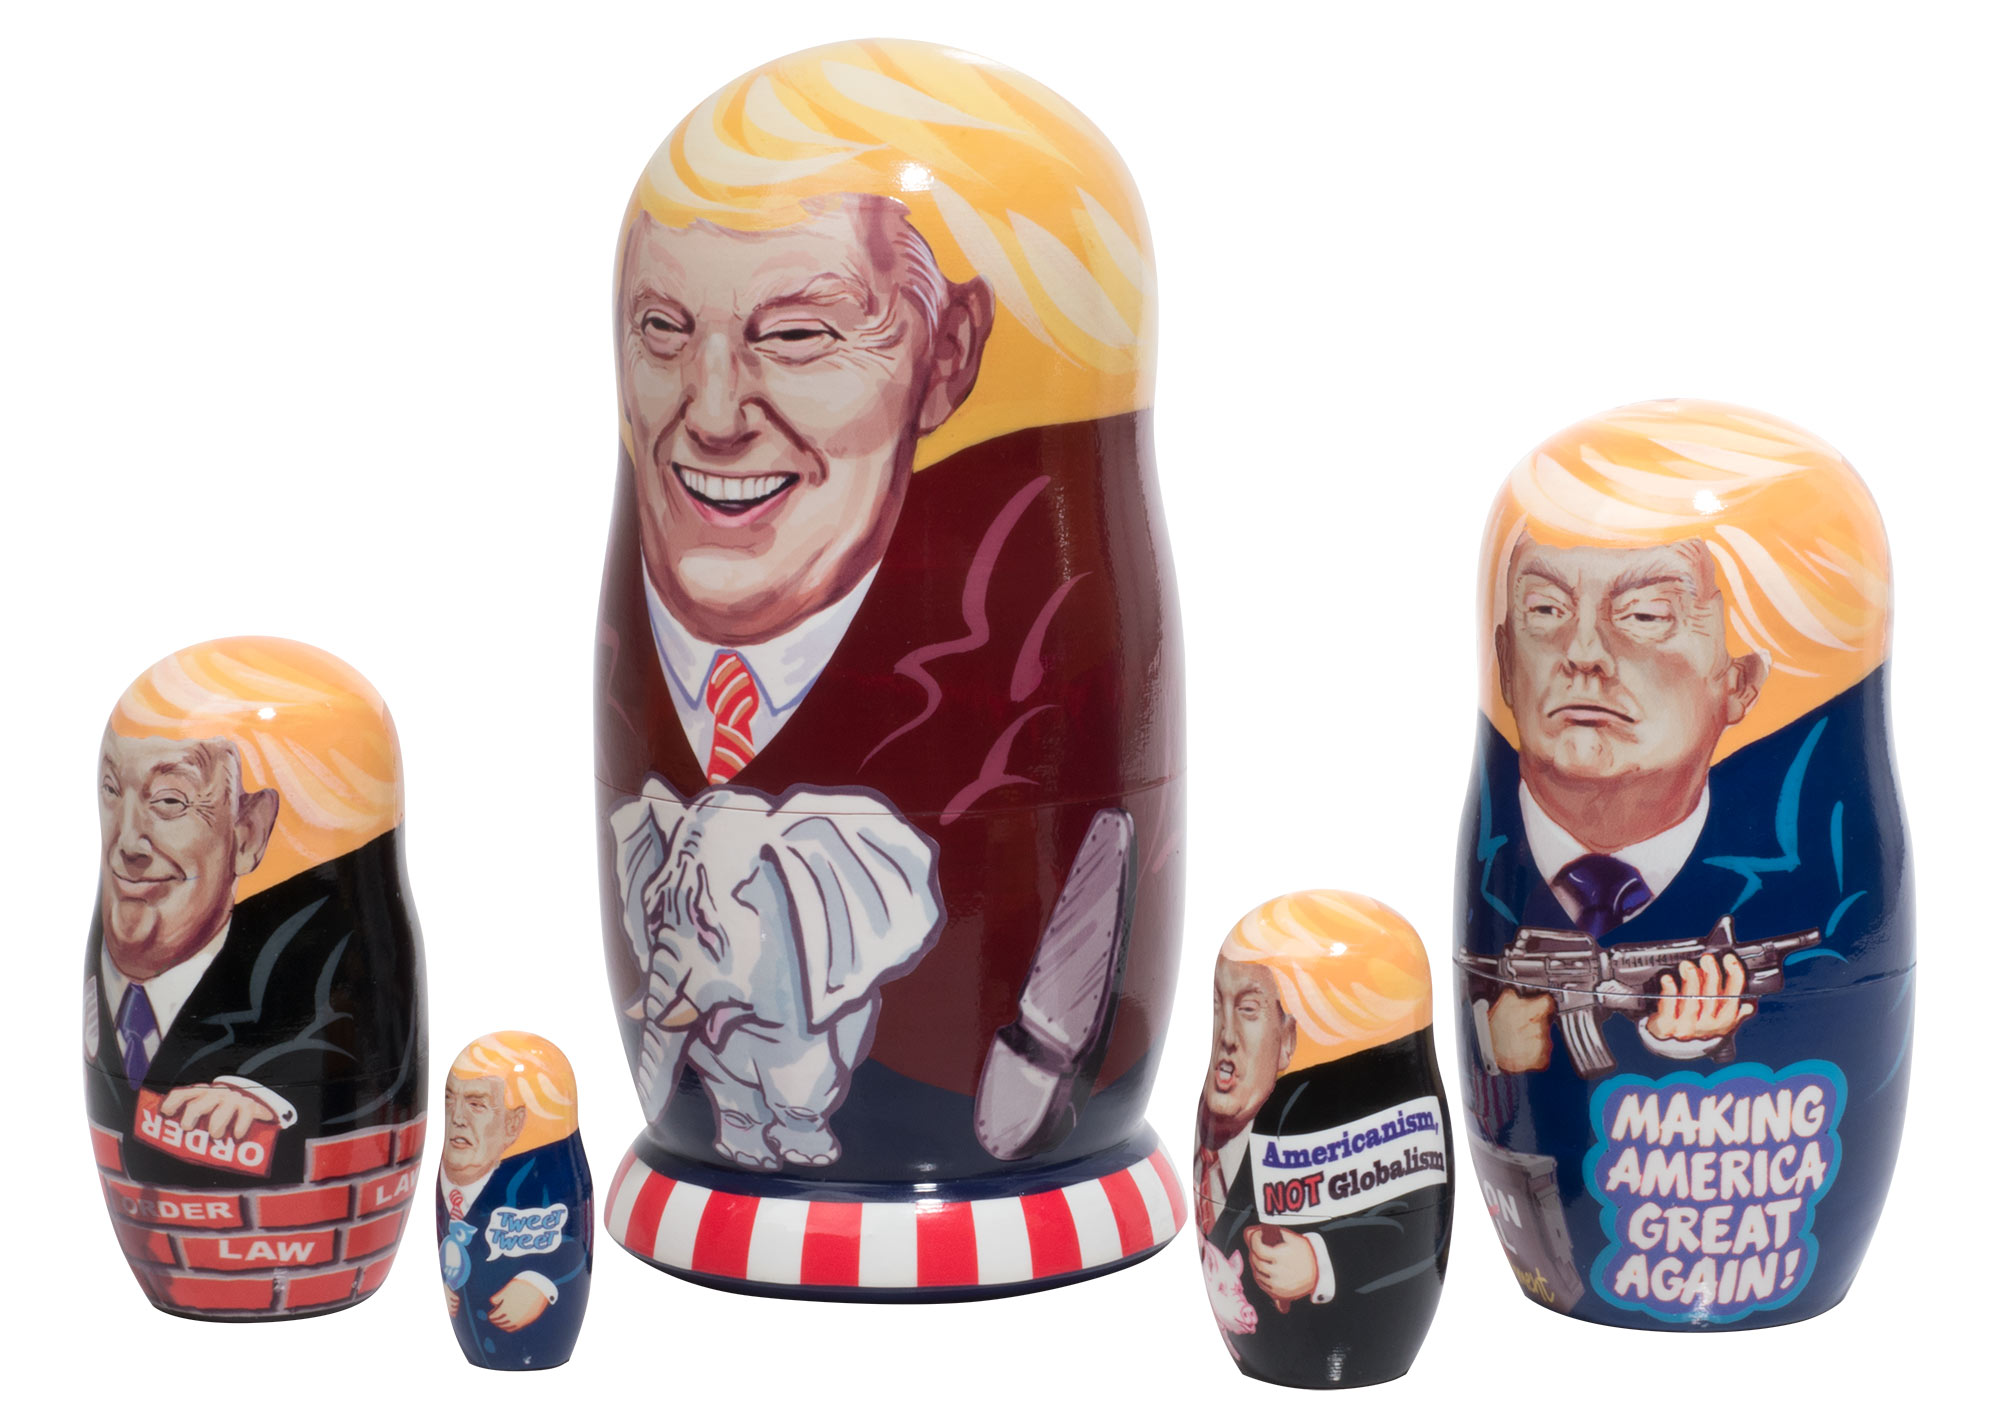 Buy Donald Trump's Campaign Nesting Doll 5pc./6" at GoldenCockerel.com